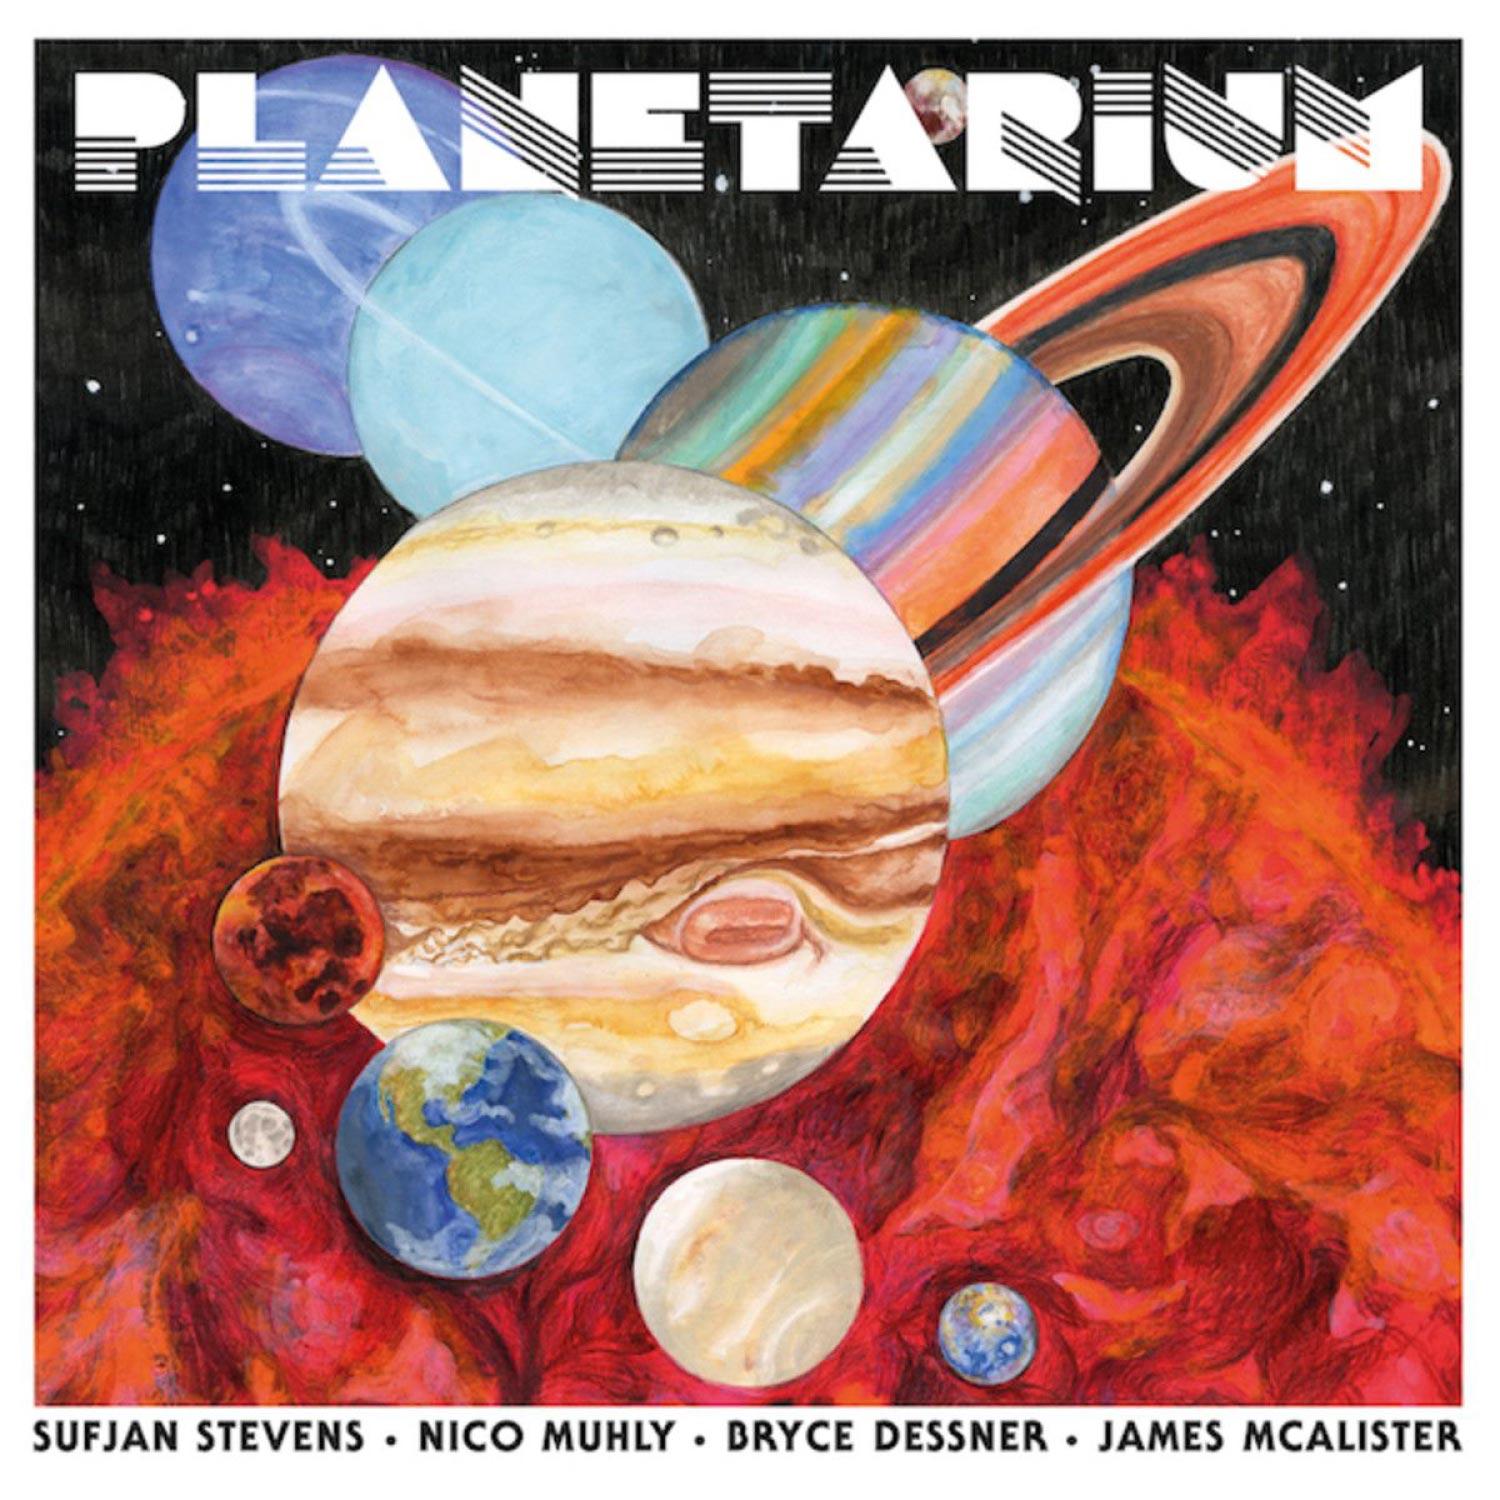 Planetarium by Sufjan Stevens, Nico Muhly, Bryce Dessner and James McAlister